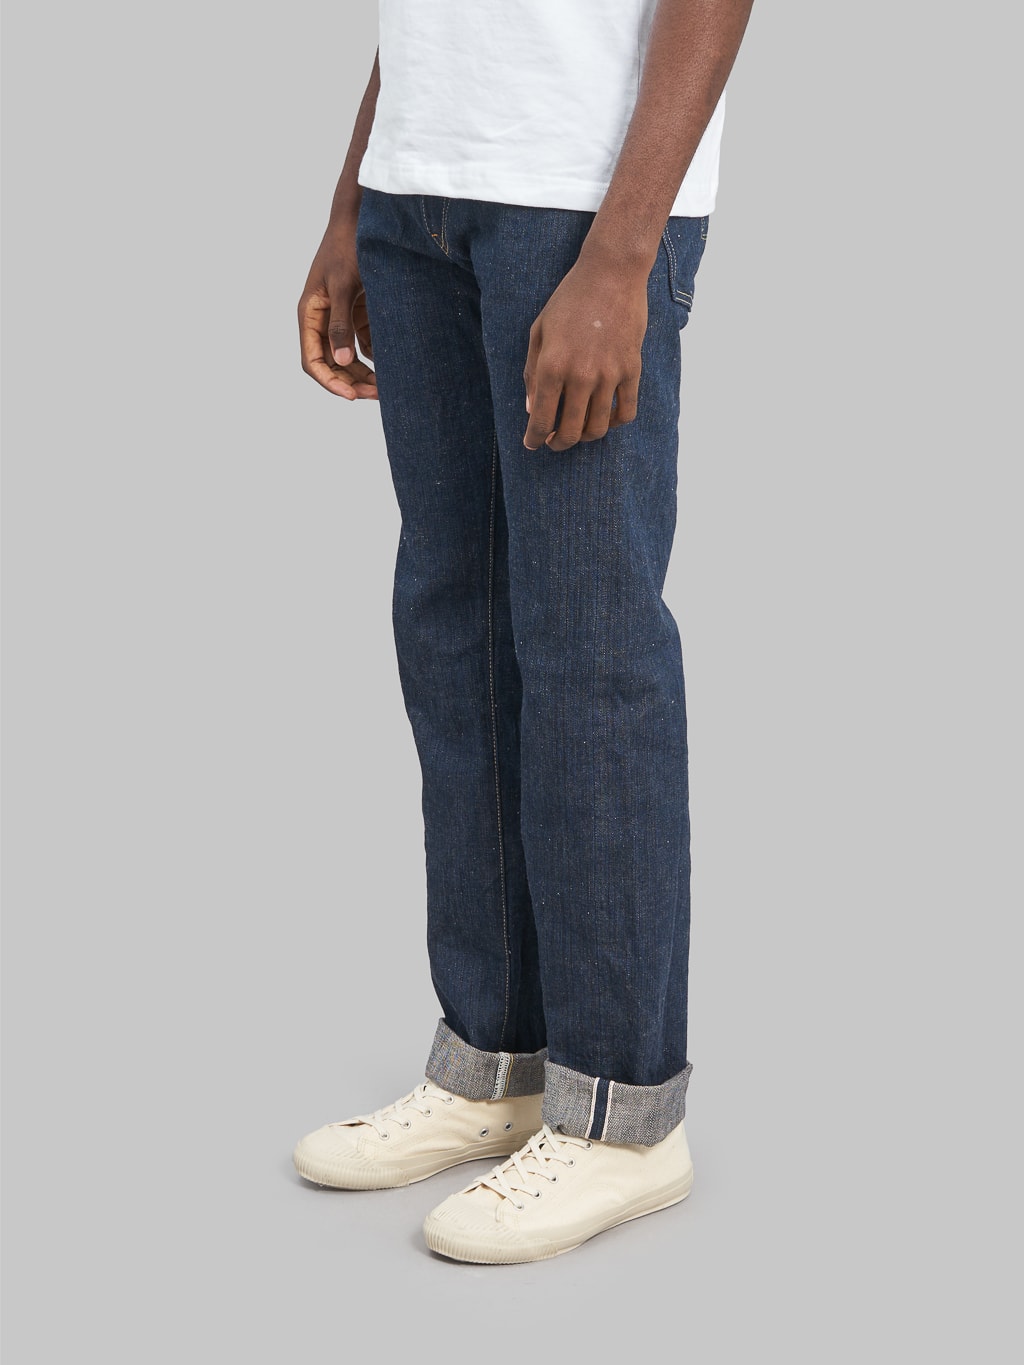 Oni denim kiwami indigo regular selvedge jeans side fit